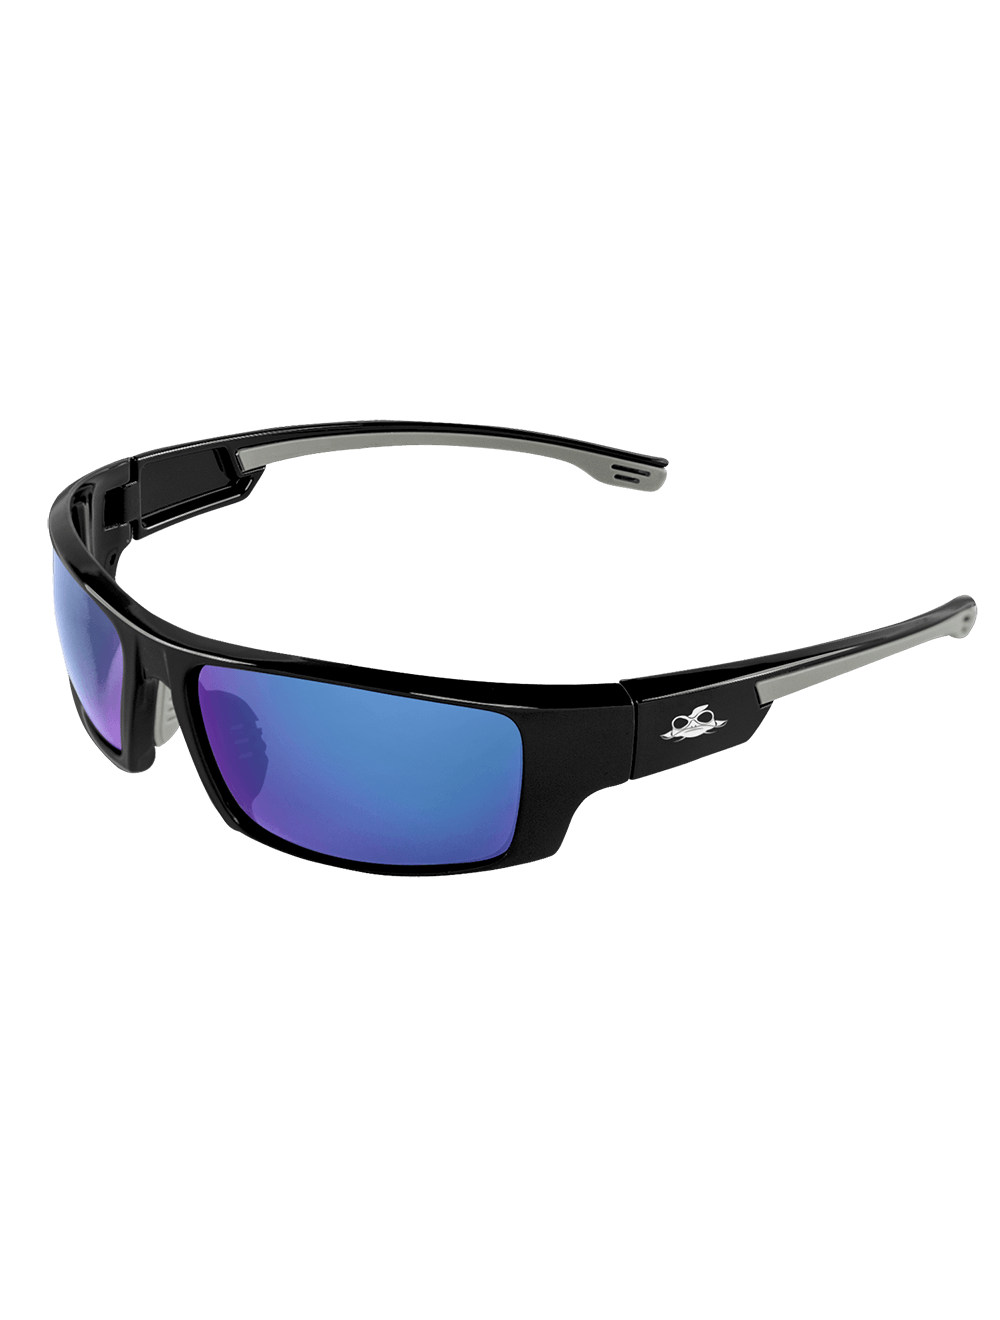 Dorado® Blue Mirror Performance Fog Technology Polarized Lens, Shiny Black Frame Safety Glasses - BH95129PFT